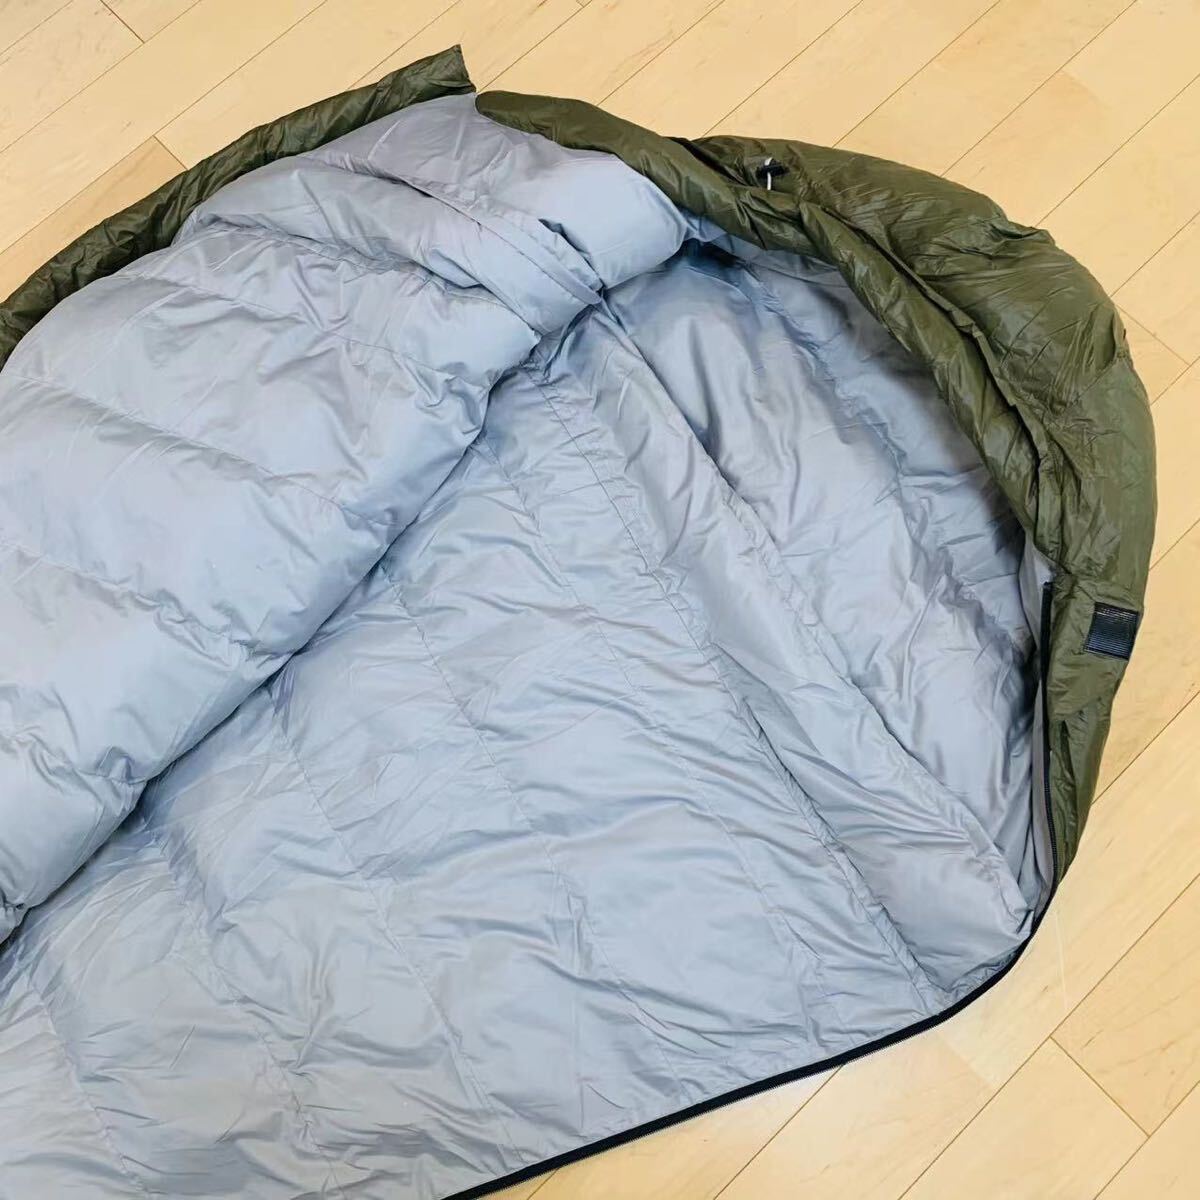 KAMPERBOX最高品質 極細1000gアヒルダウン マミー型寝袋 シュラフ厚暖撥水 最低-35℃ アウトドア キャンプ 野外登山 車中泊 205x88cm 1.6kgの画像4